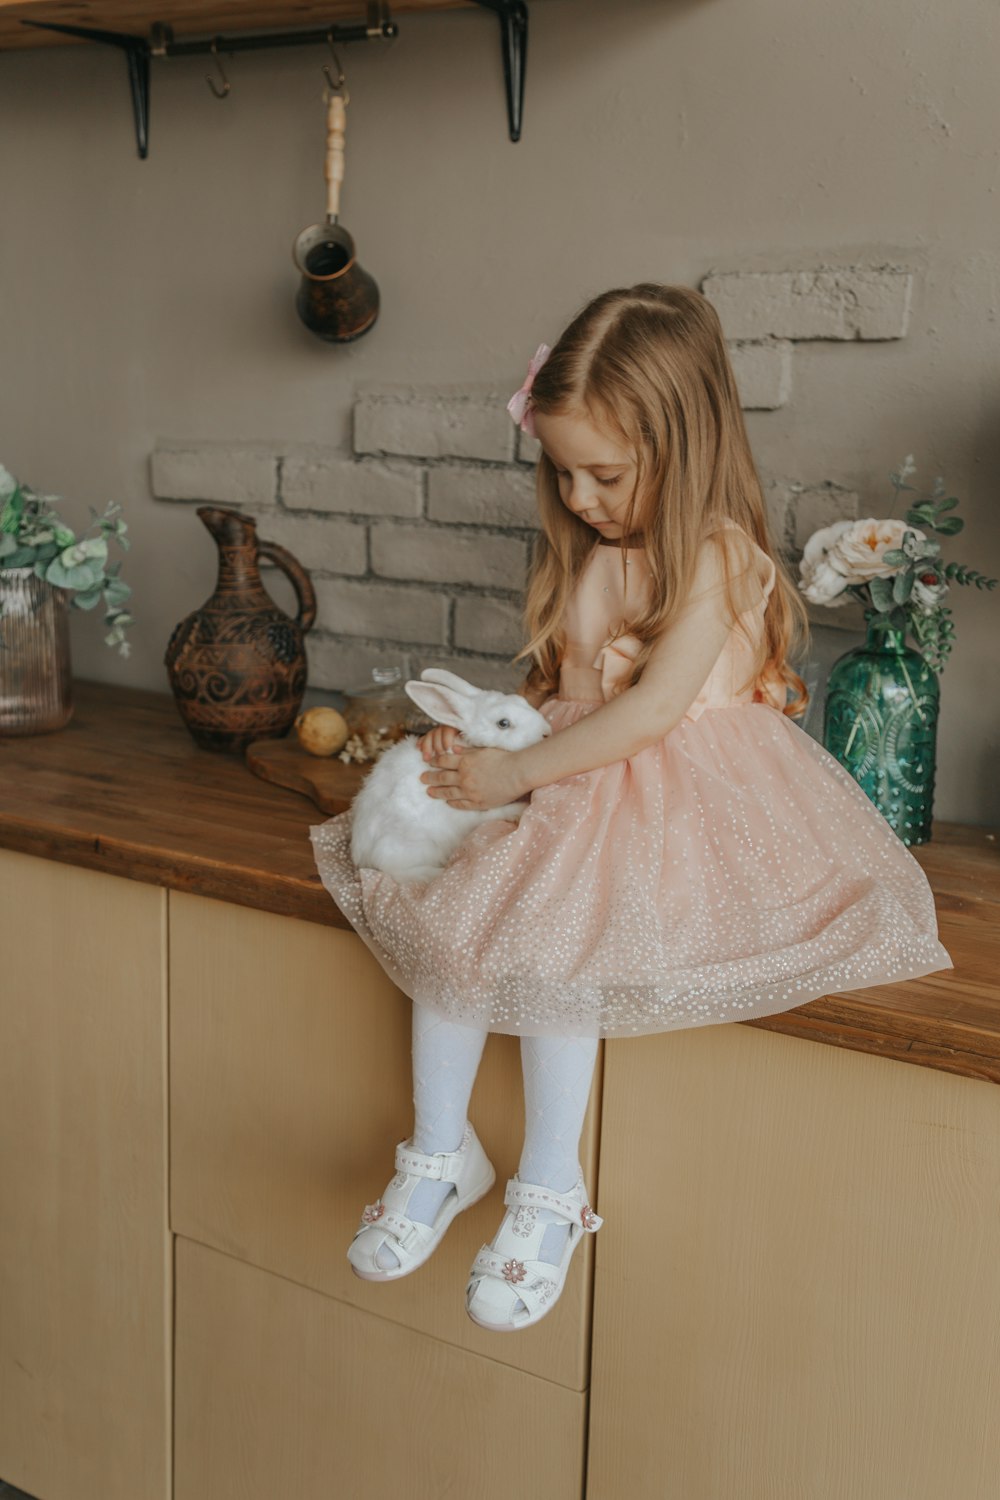 woman in pink dress holding white rabbit plush toy